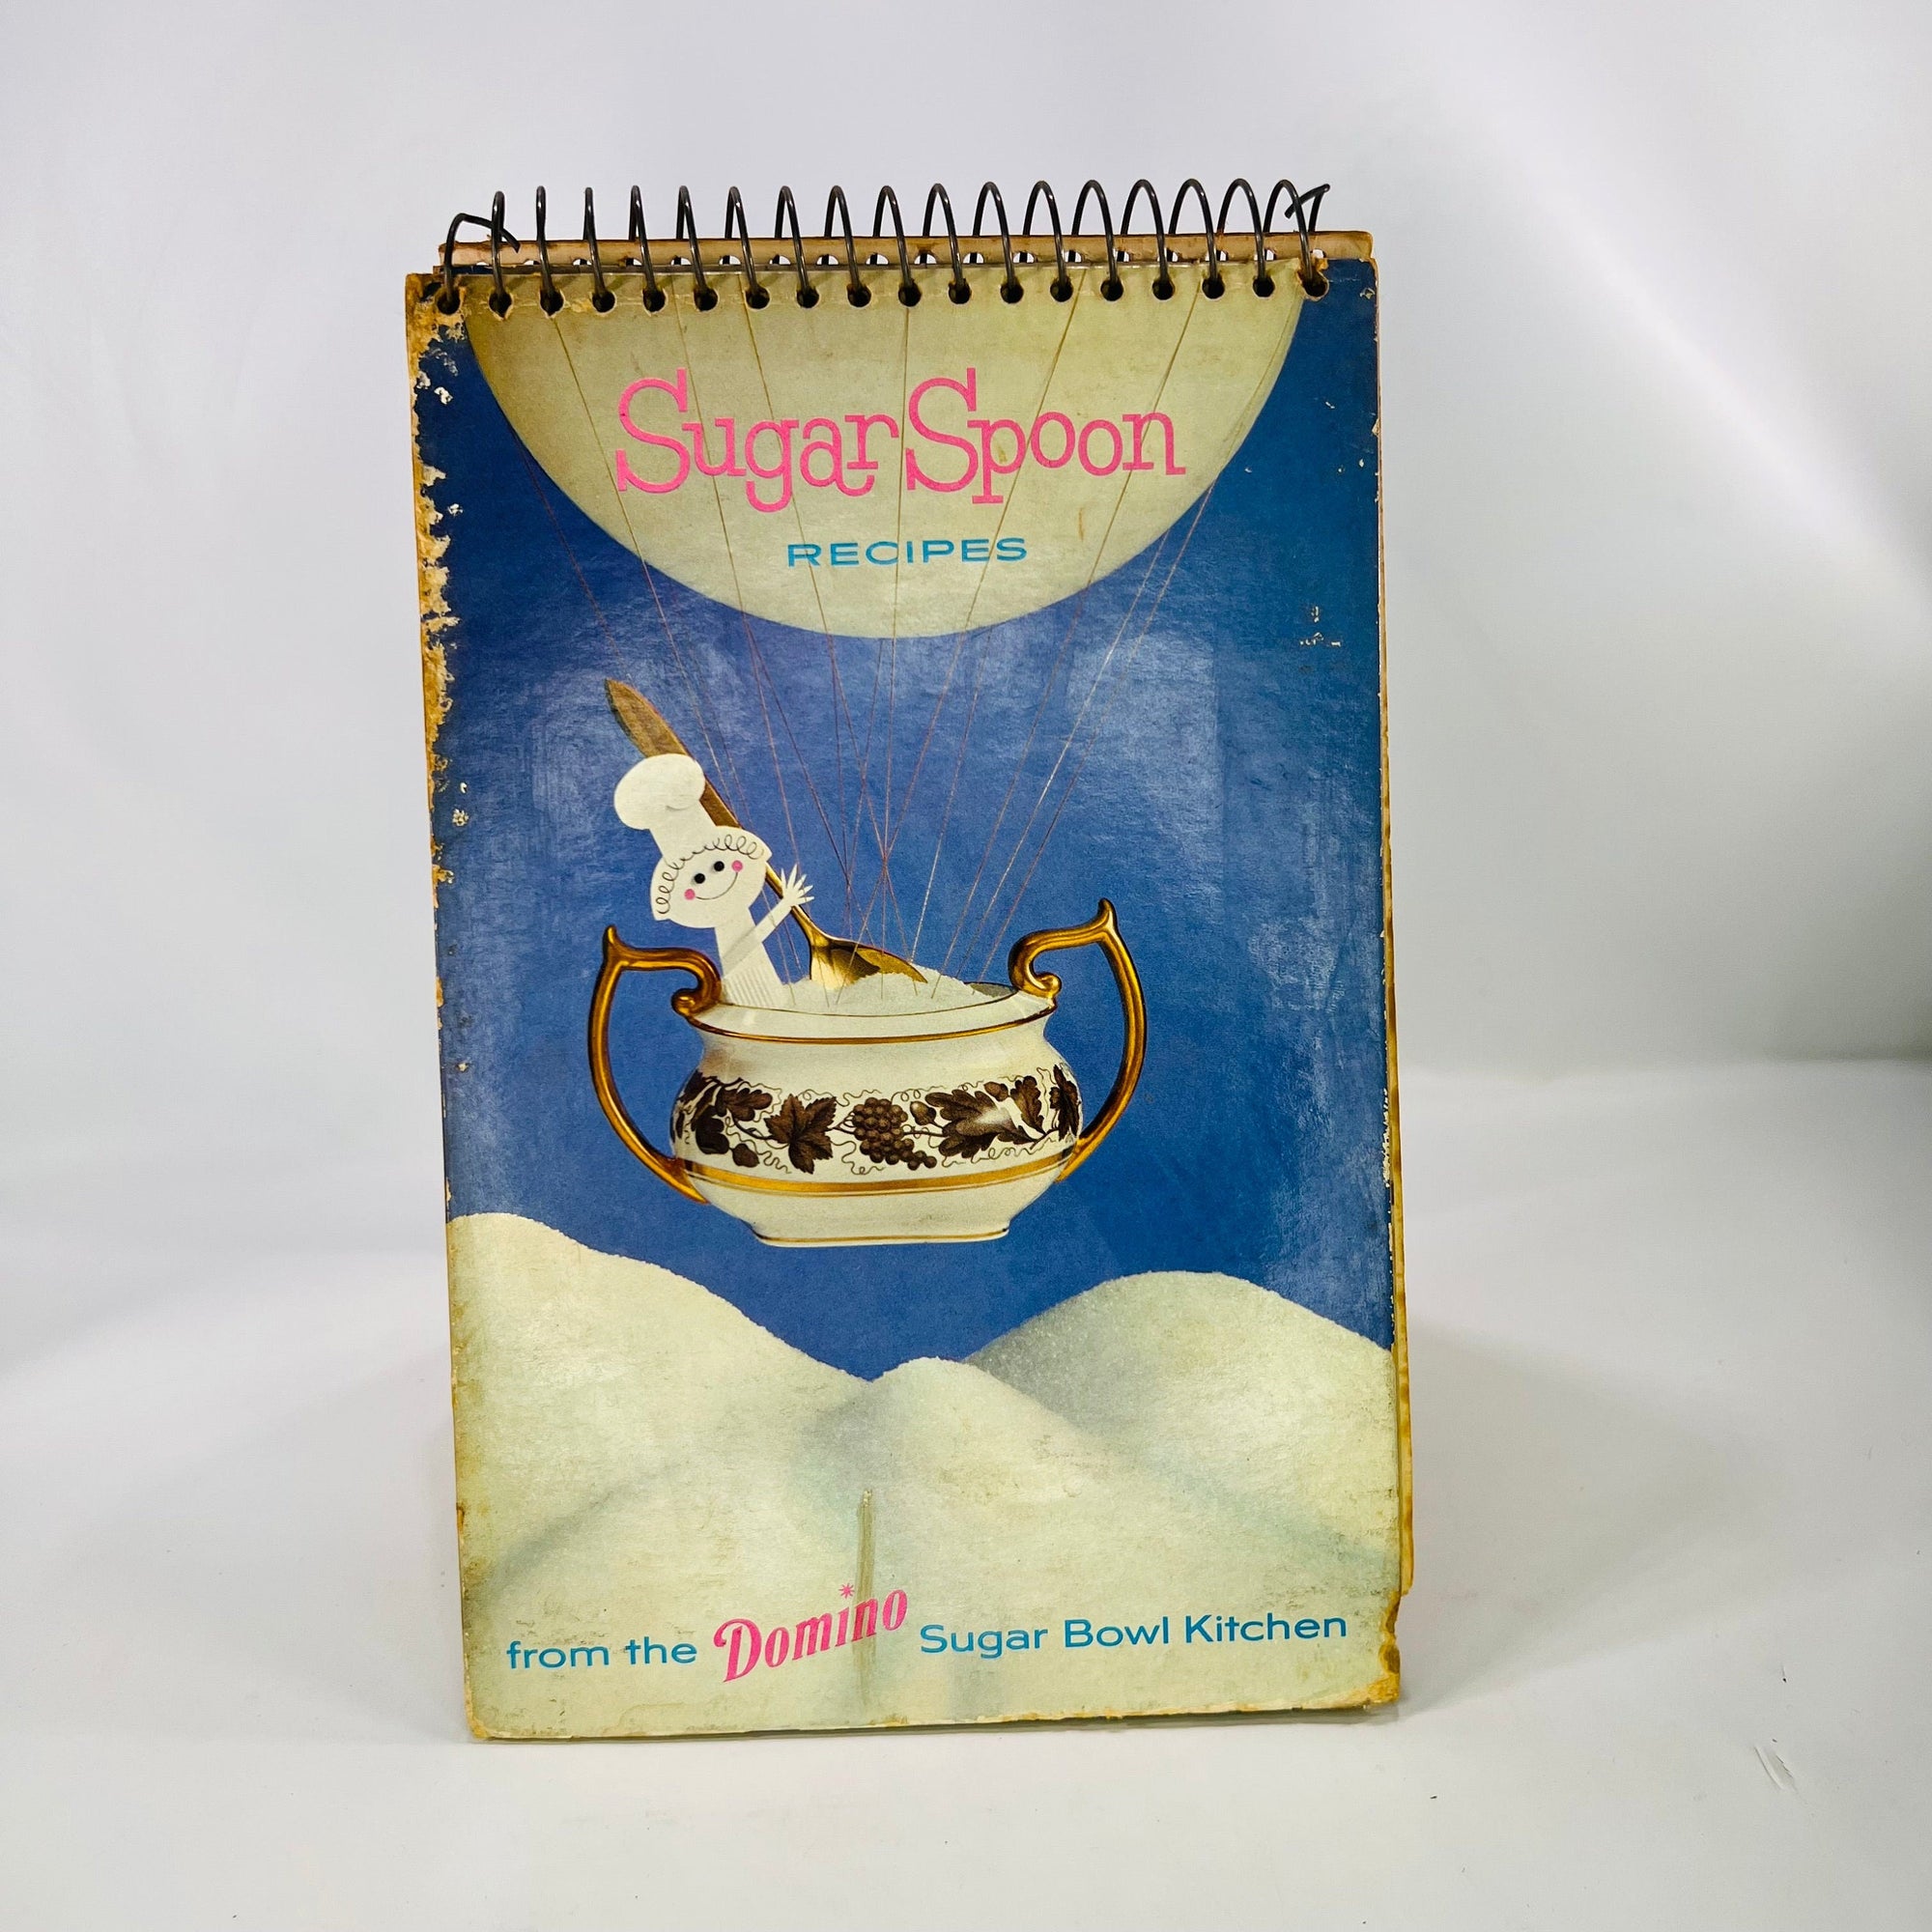 Sugar Spoon Recipes from the Domino Sugar Bowl Kitchen 1962 The American Sugar Refining Company Vintage Book